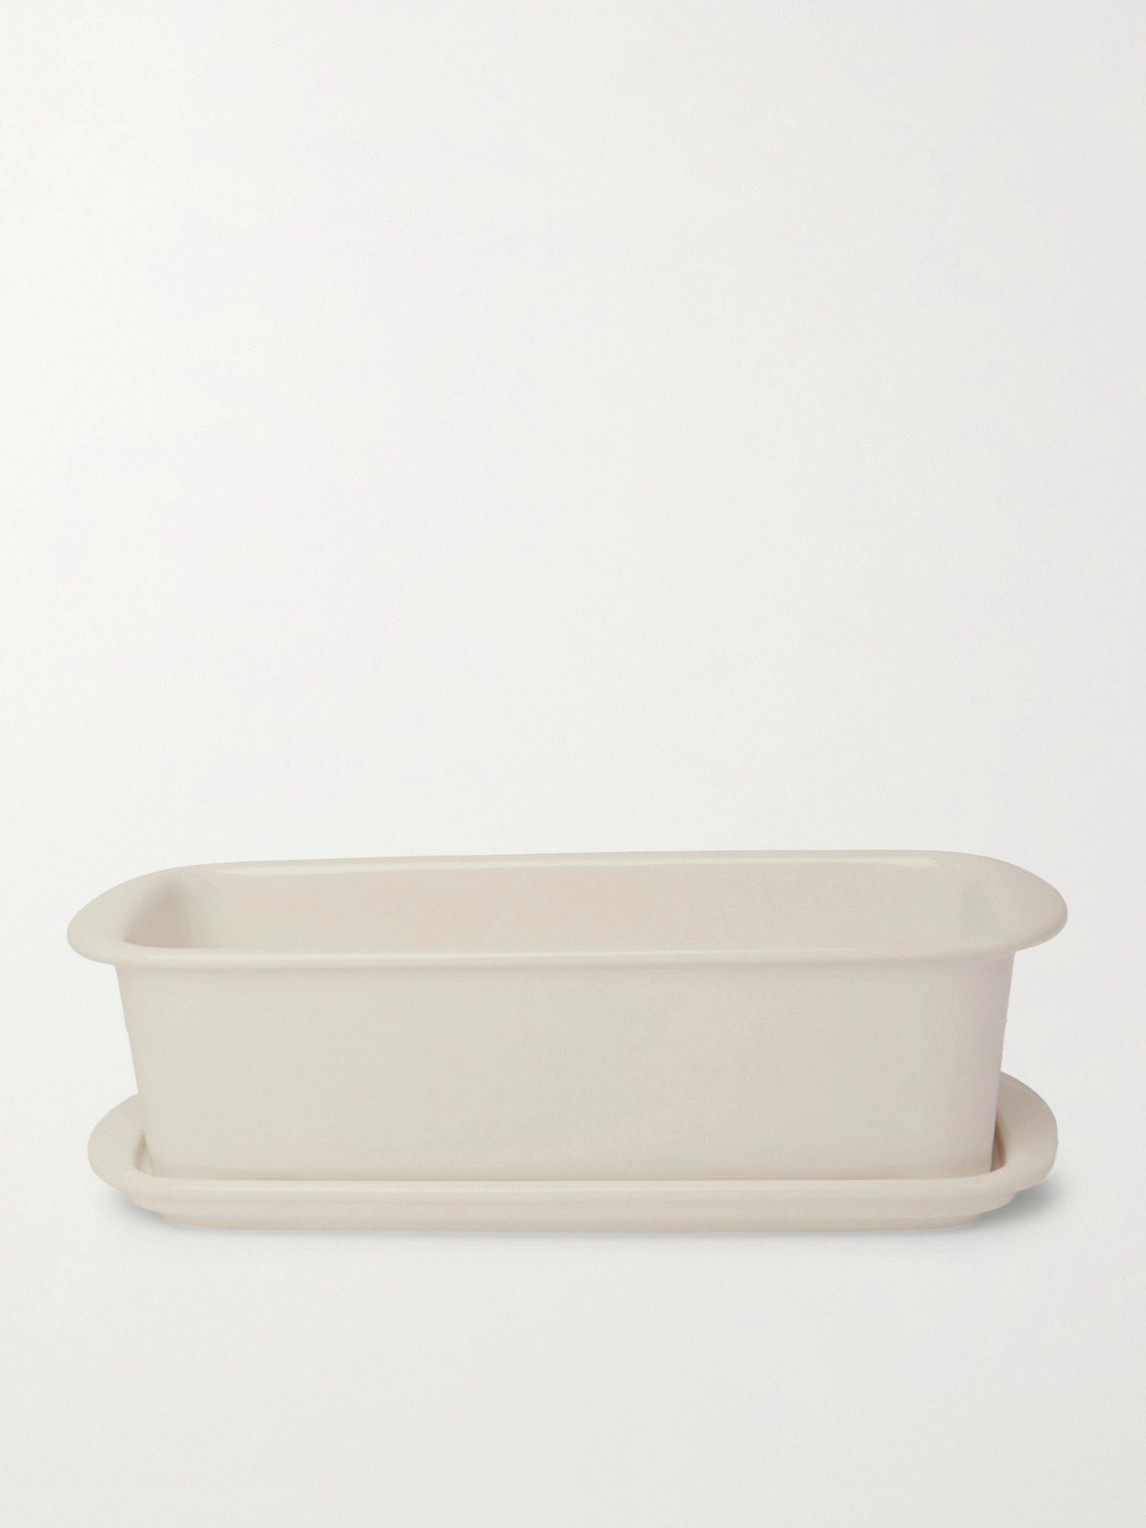 By Japan Ceramic Japan Harvest Large Porcelain Box In White